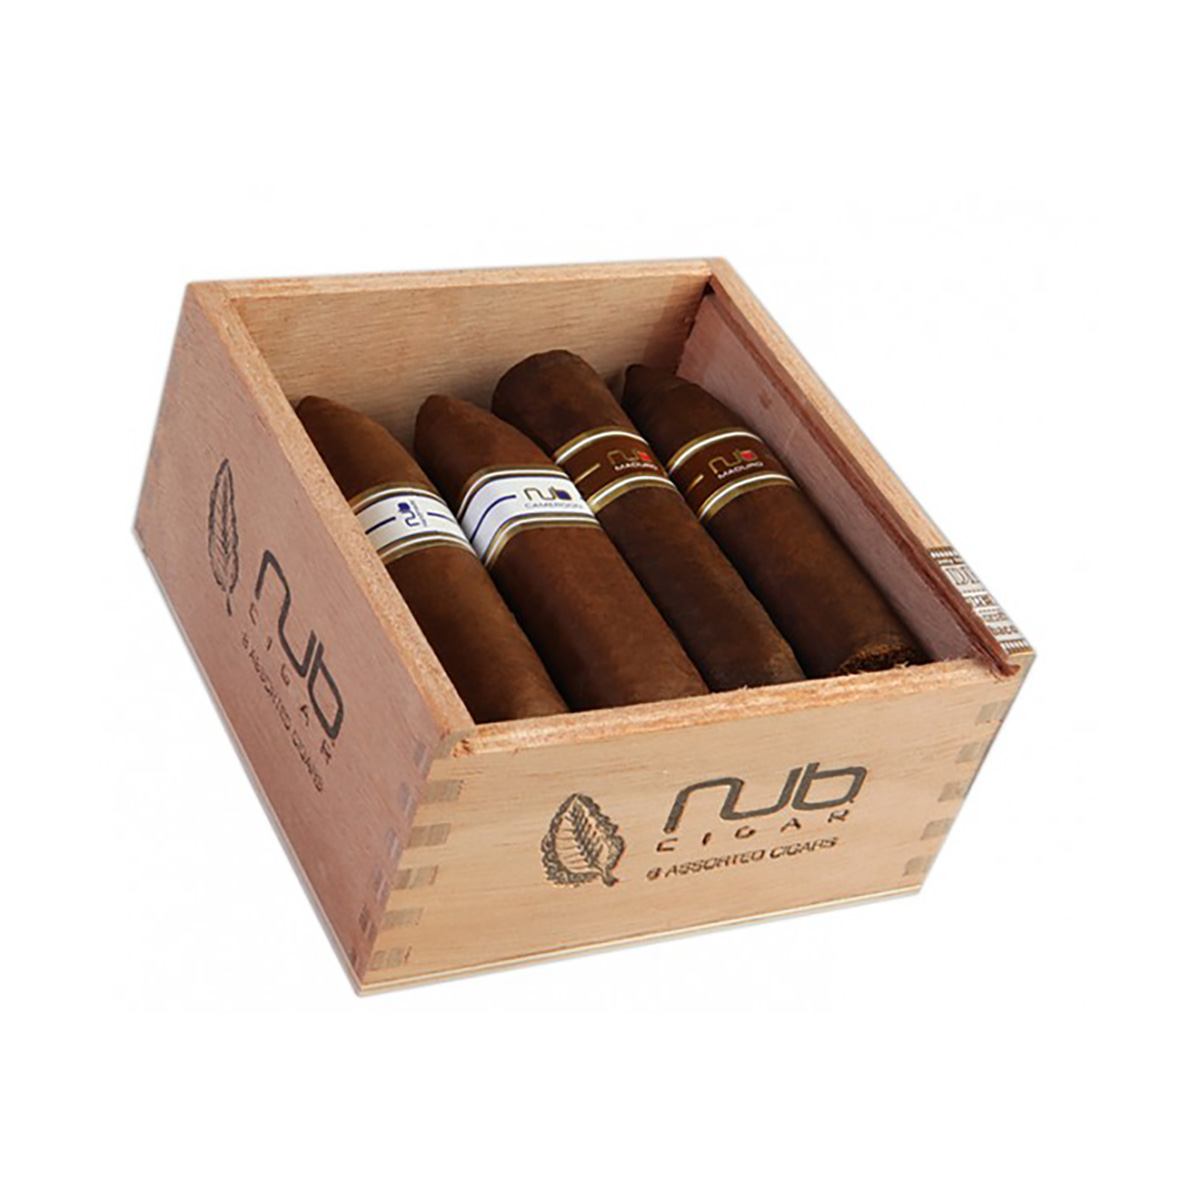 Studio Tobac - Nicaragua - Nub Sampler 8 Box (Made by Oliva Cigars) (Box of 8)